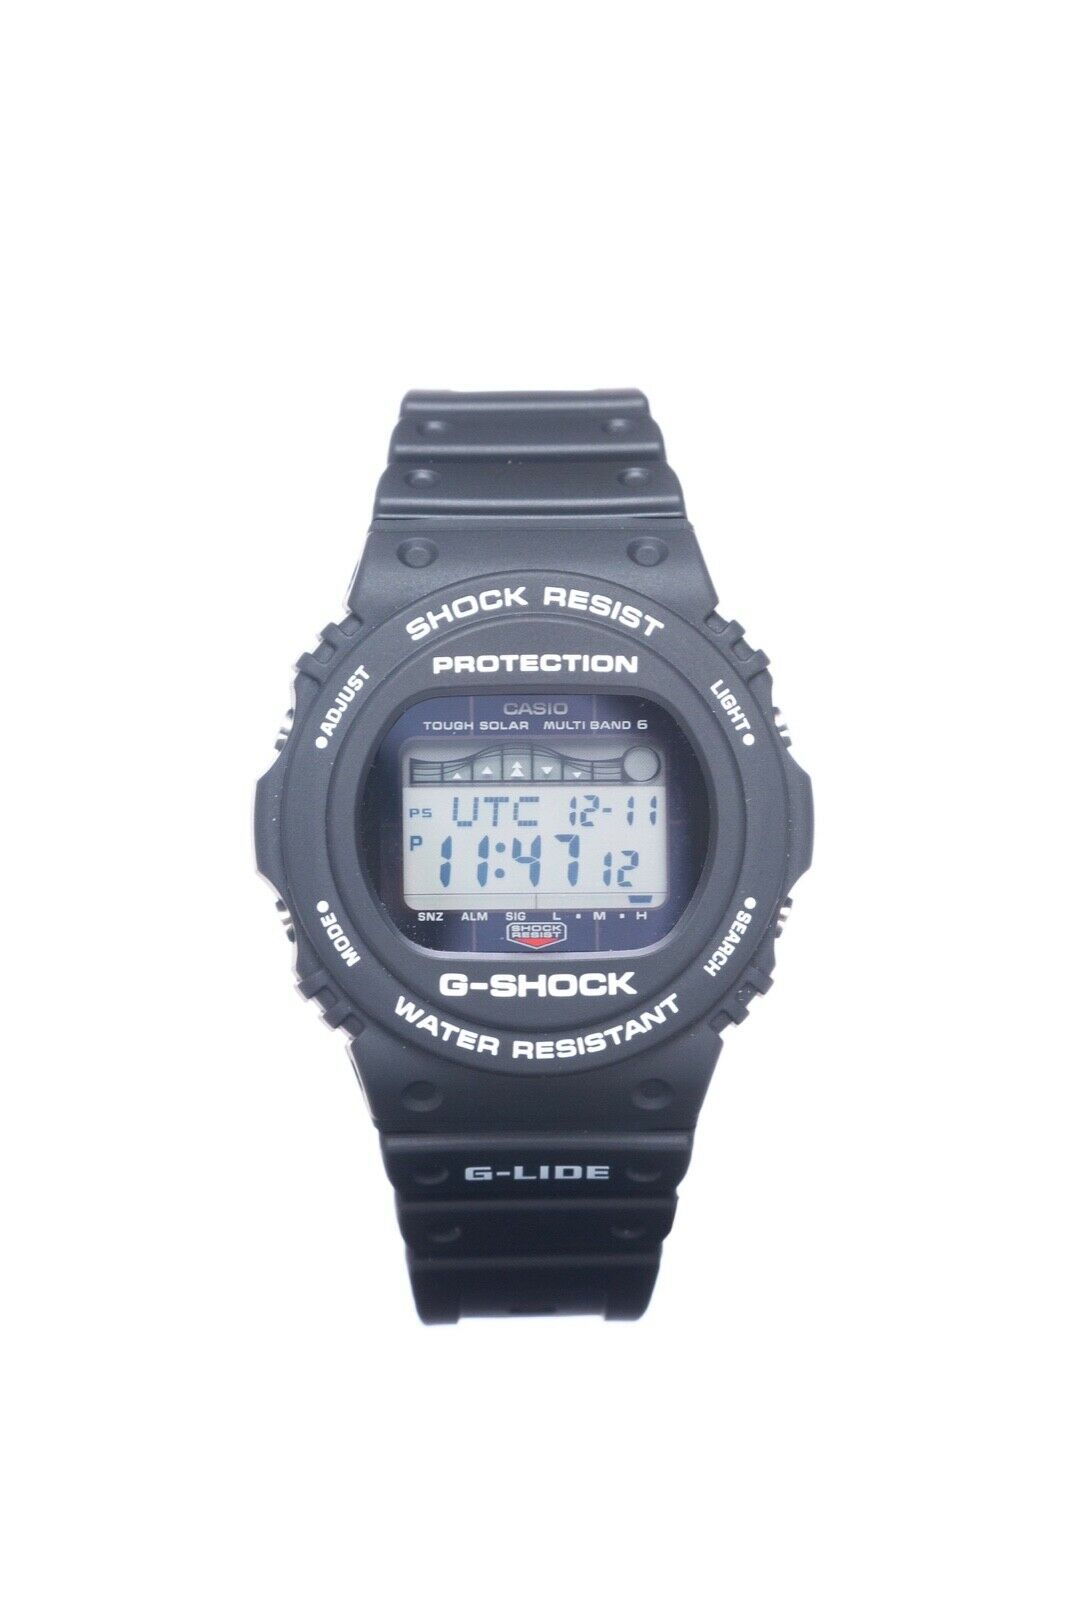 Casio G Shock Black Resin G Lide Watch Gwx 5700cs 1 Box Surf Men S Digital Cool Watchcharts